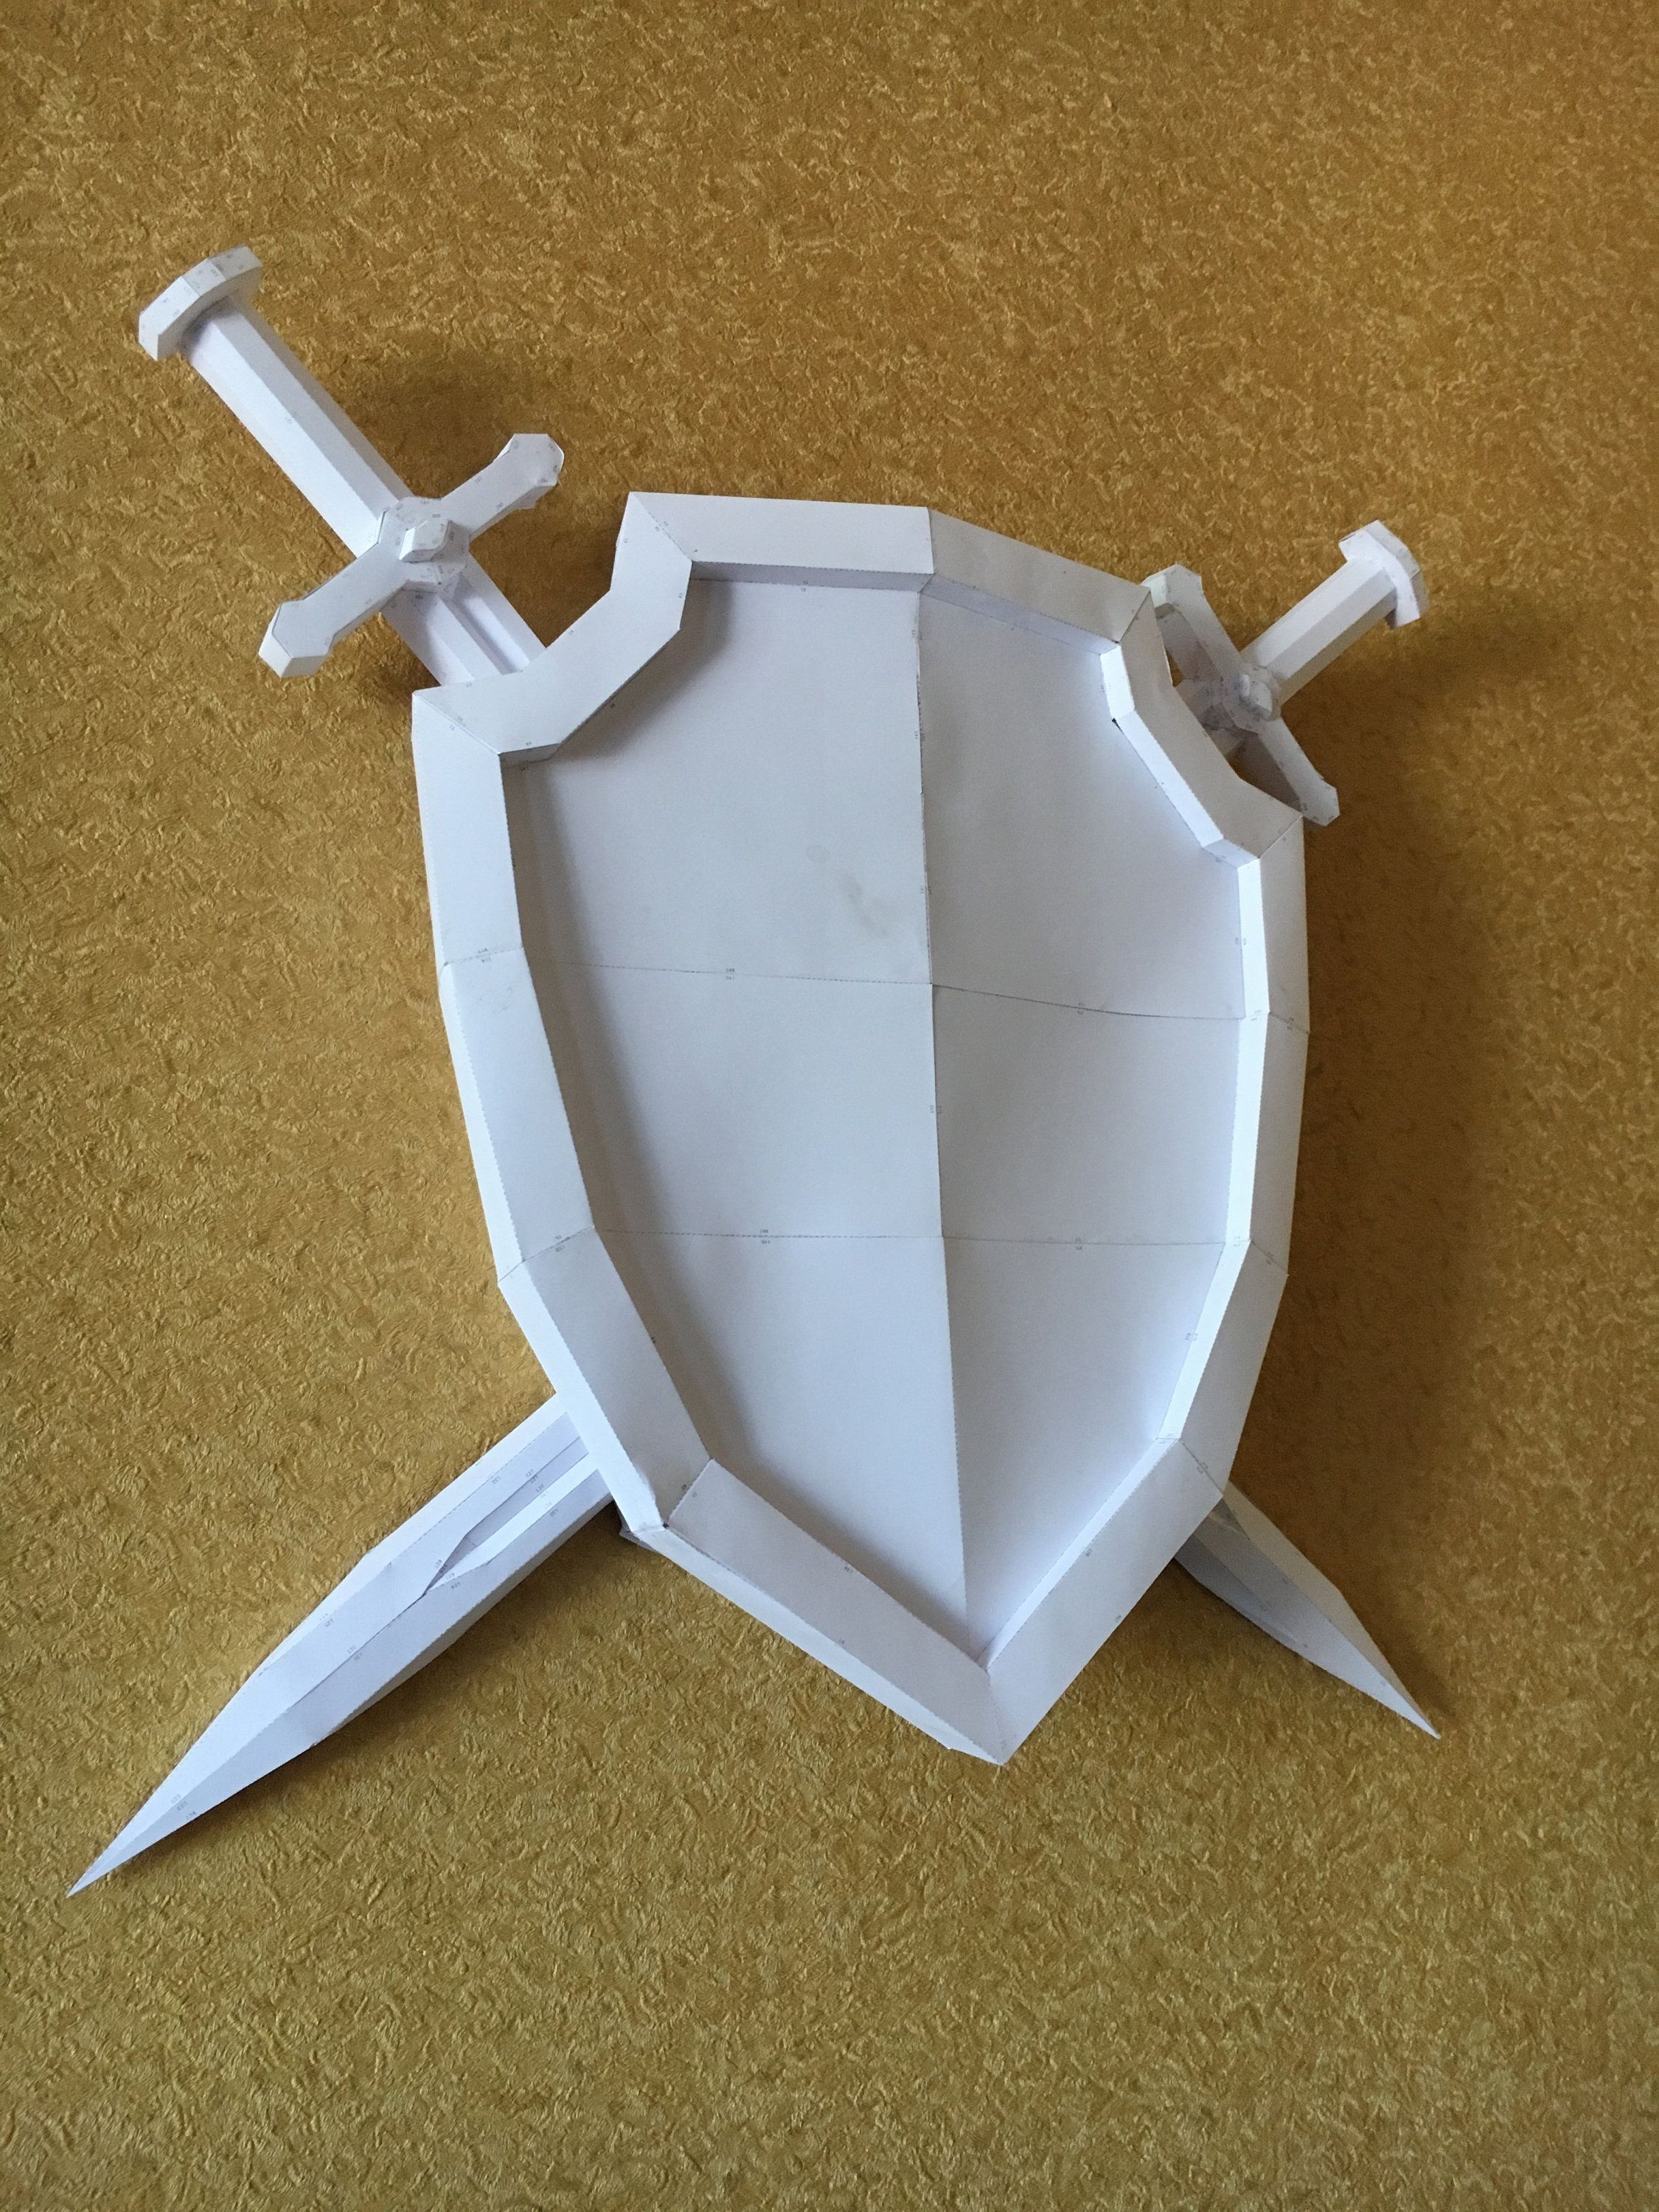 Papercraft Canon Sword Shield Diy Papercraft Model ÐÑÐ¼Ð°Ð¶Ð½ÑÐµ Ð¸Ð·Ð´ÐµÐ Ð¸Ñ